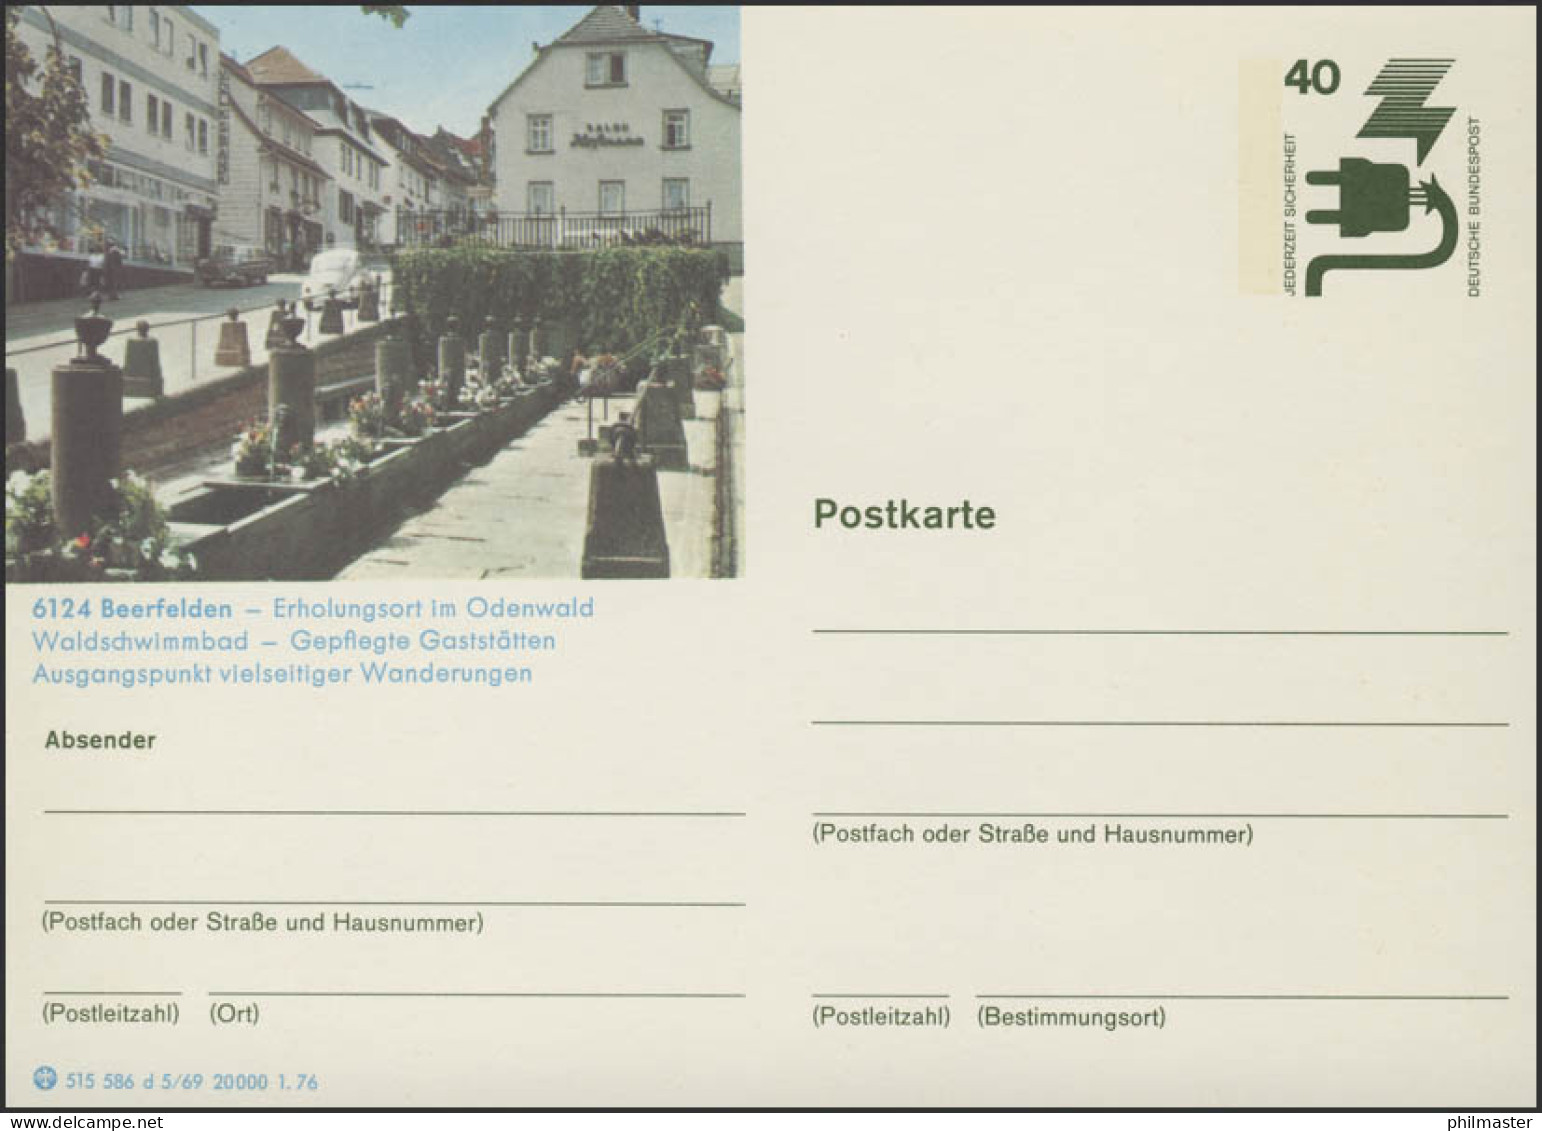 P120-d5/069 6124 Beerfelden, Teilansicht, ** - Illustrated Postcards - Mint